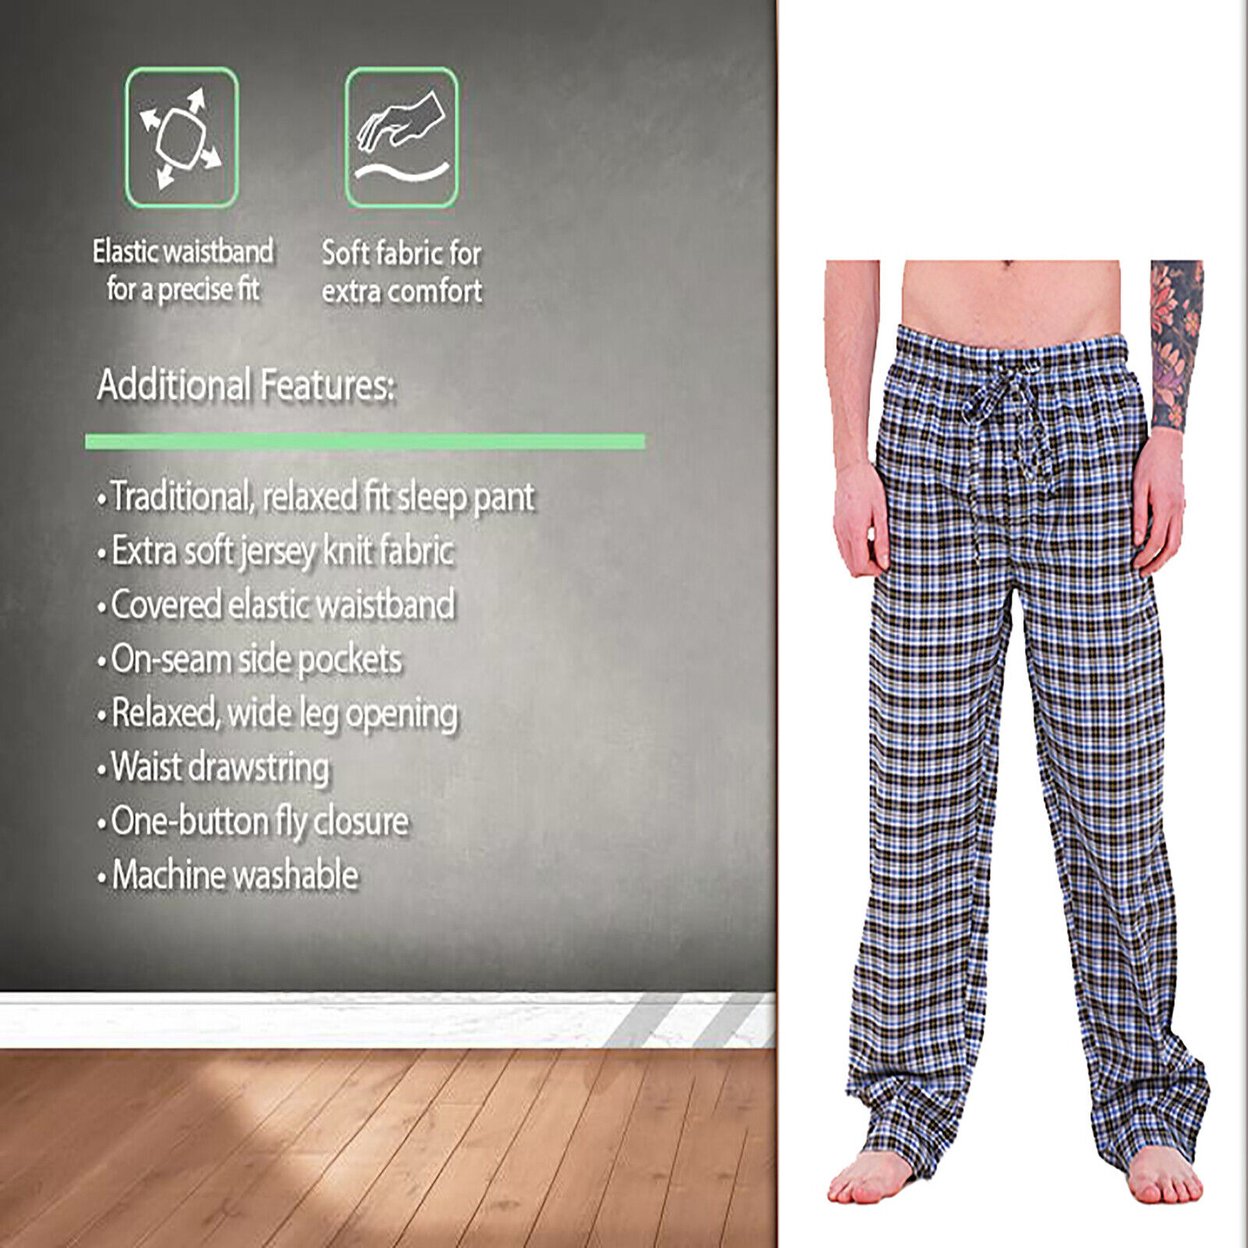 4-Pack: Men's Ultra-Soft Plaid Cotton Jersey Knit Comfy Sleep Lounge Pajama Pants - Small